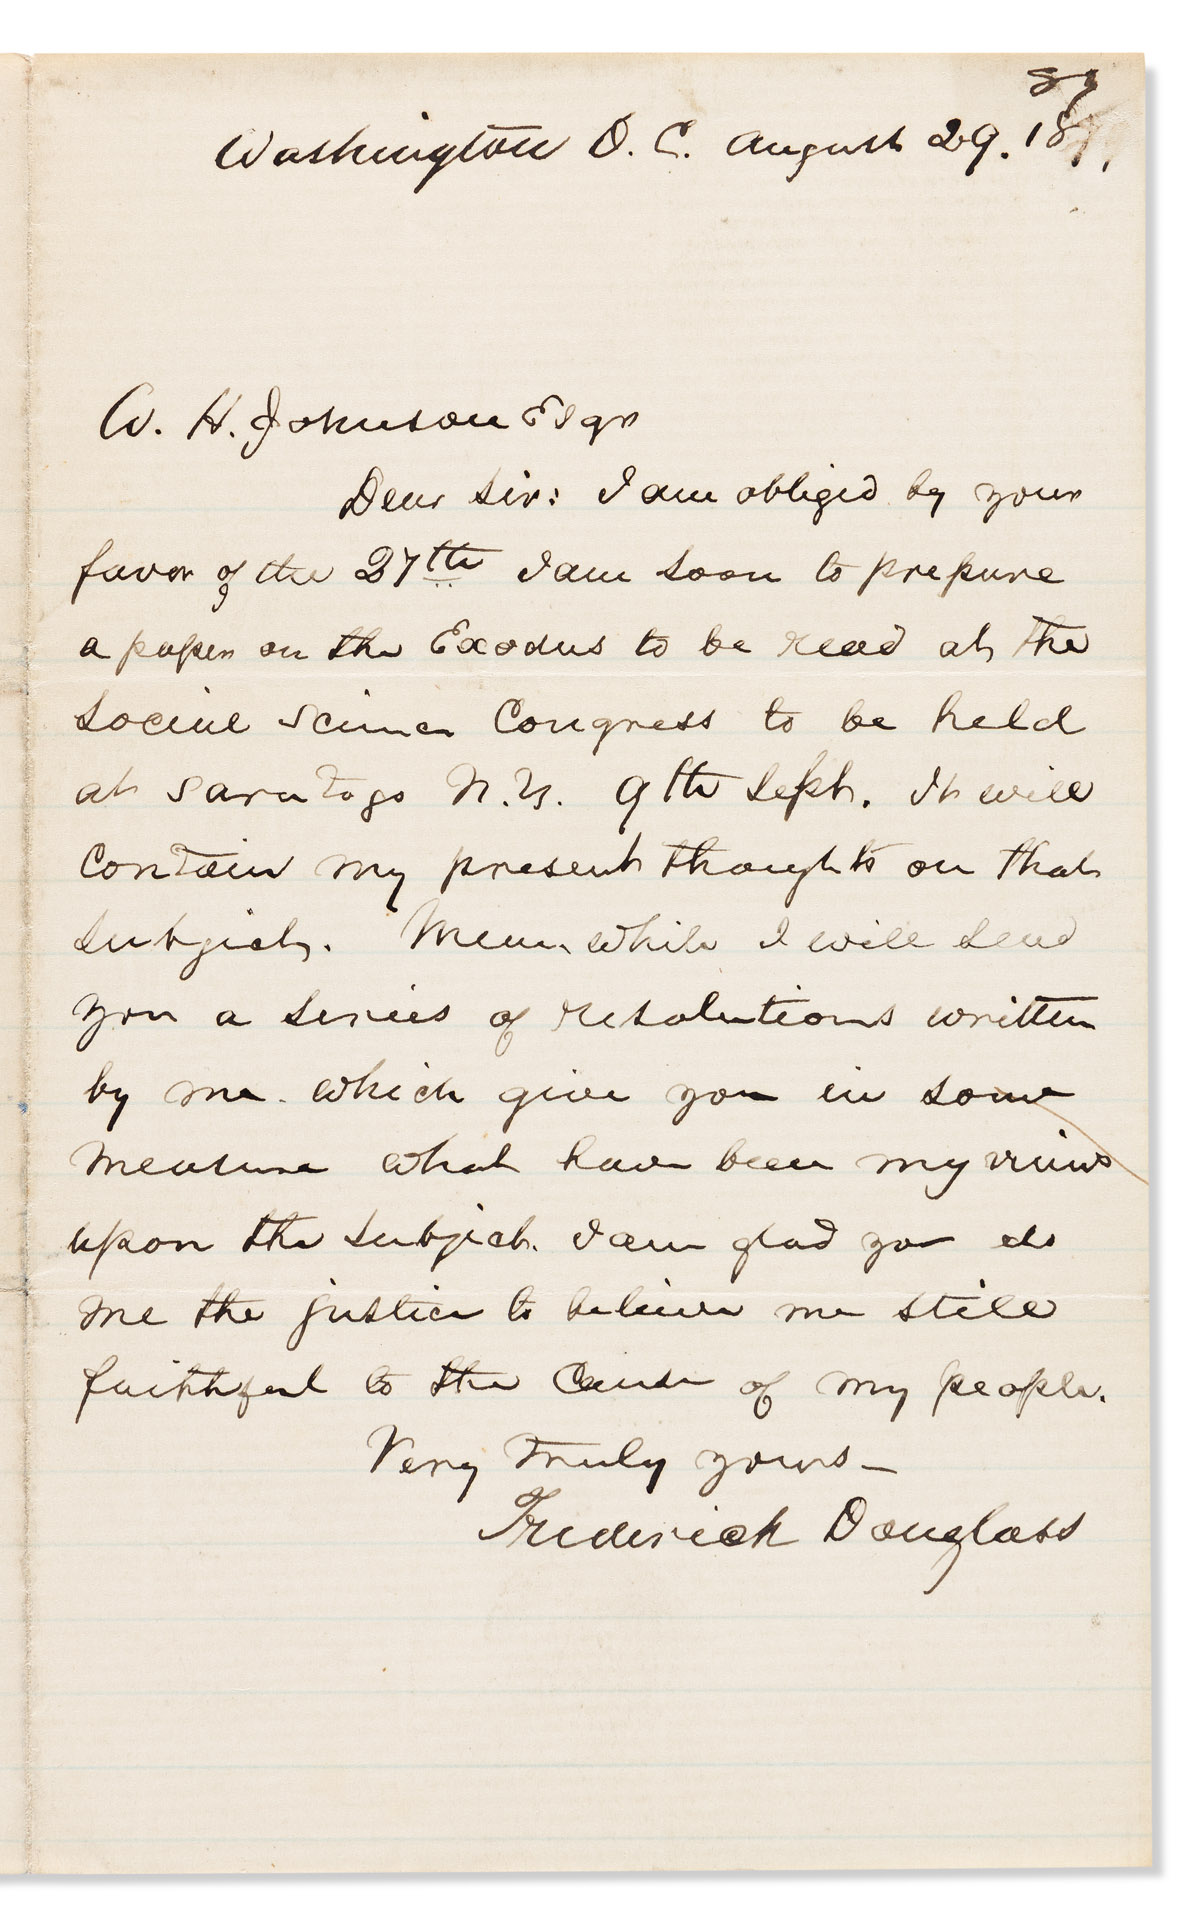 DOUGLASS, FREDERICK. Autograph Letter Signed, to W.H. Johnson,